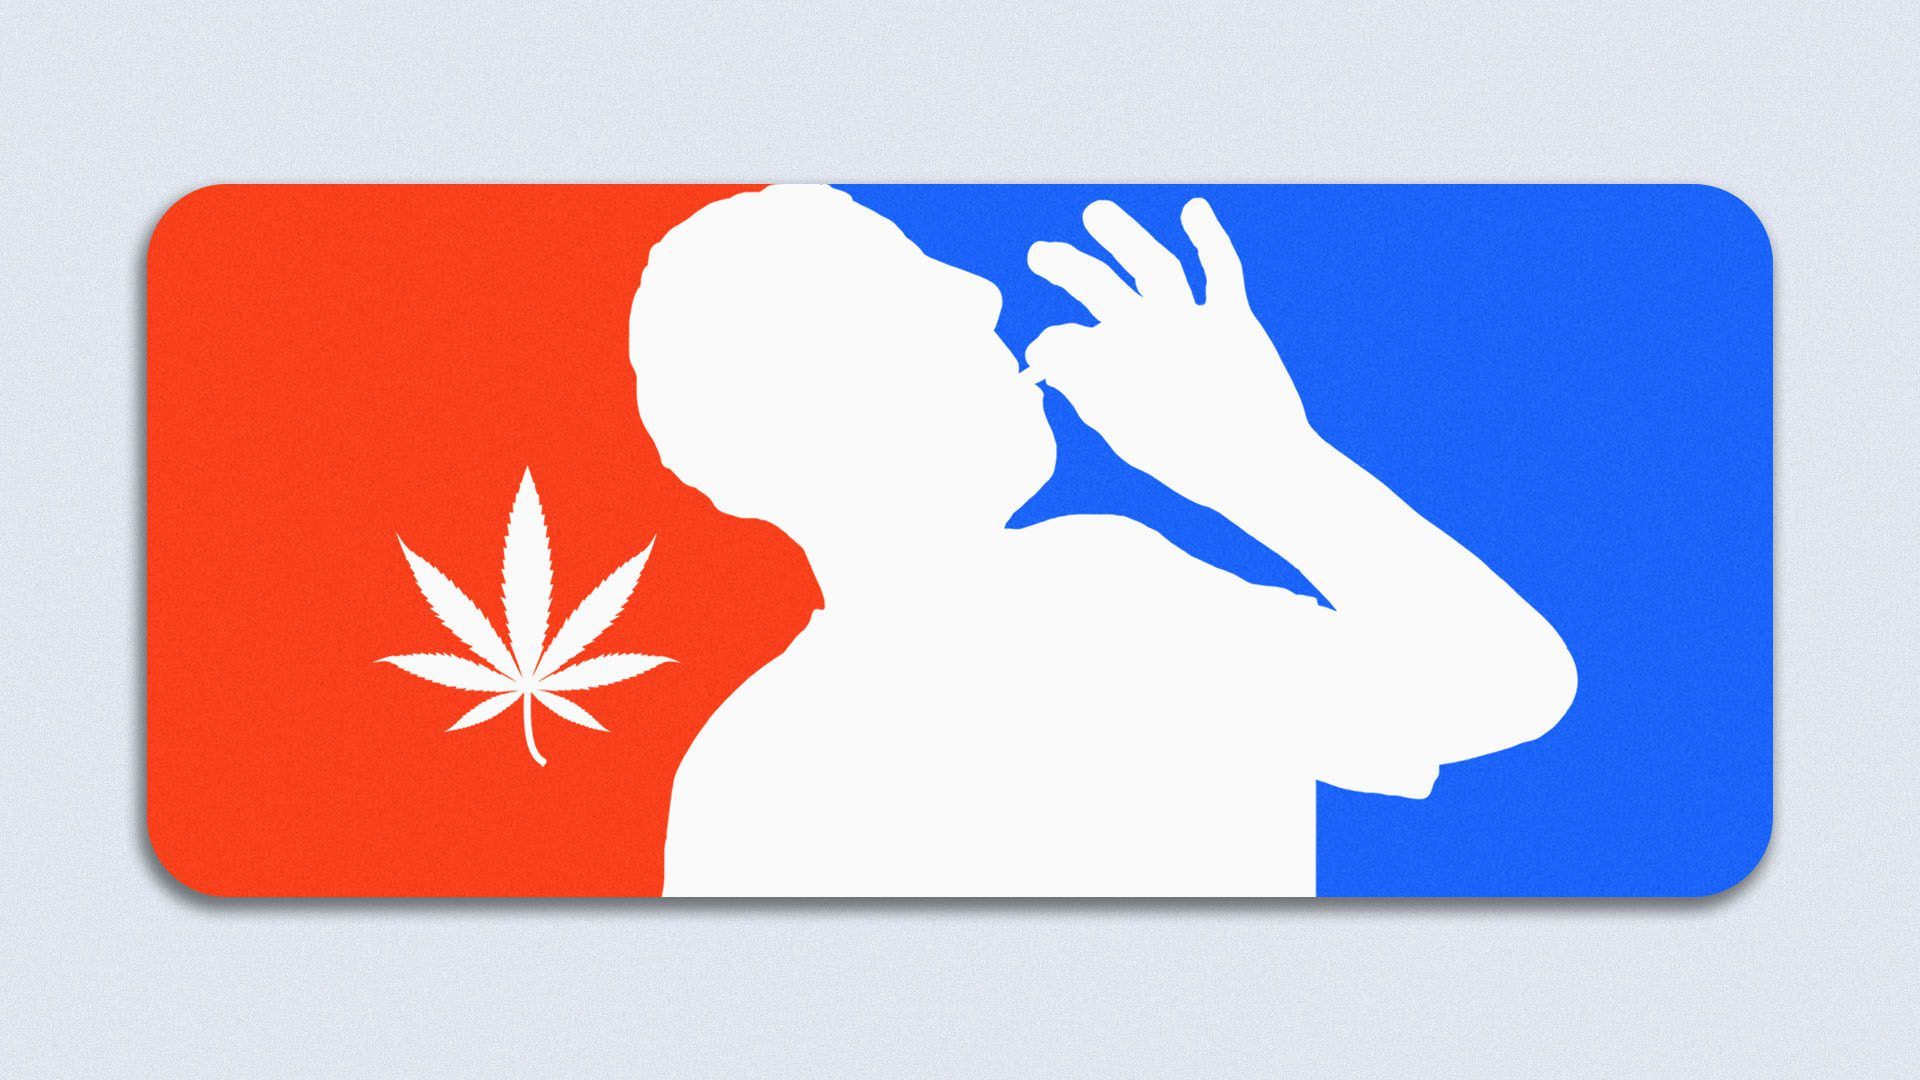 Illustration of a mock sports league logo featuring a man smoking pot and a marijuana leaf